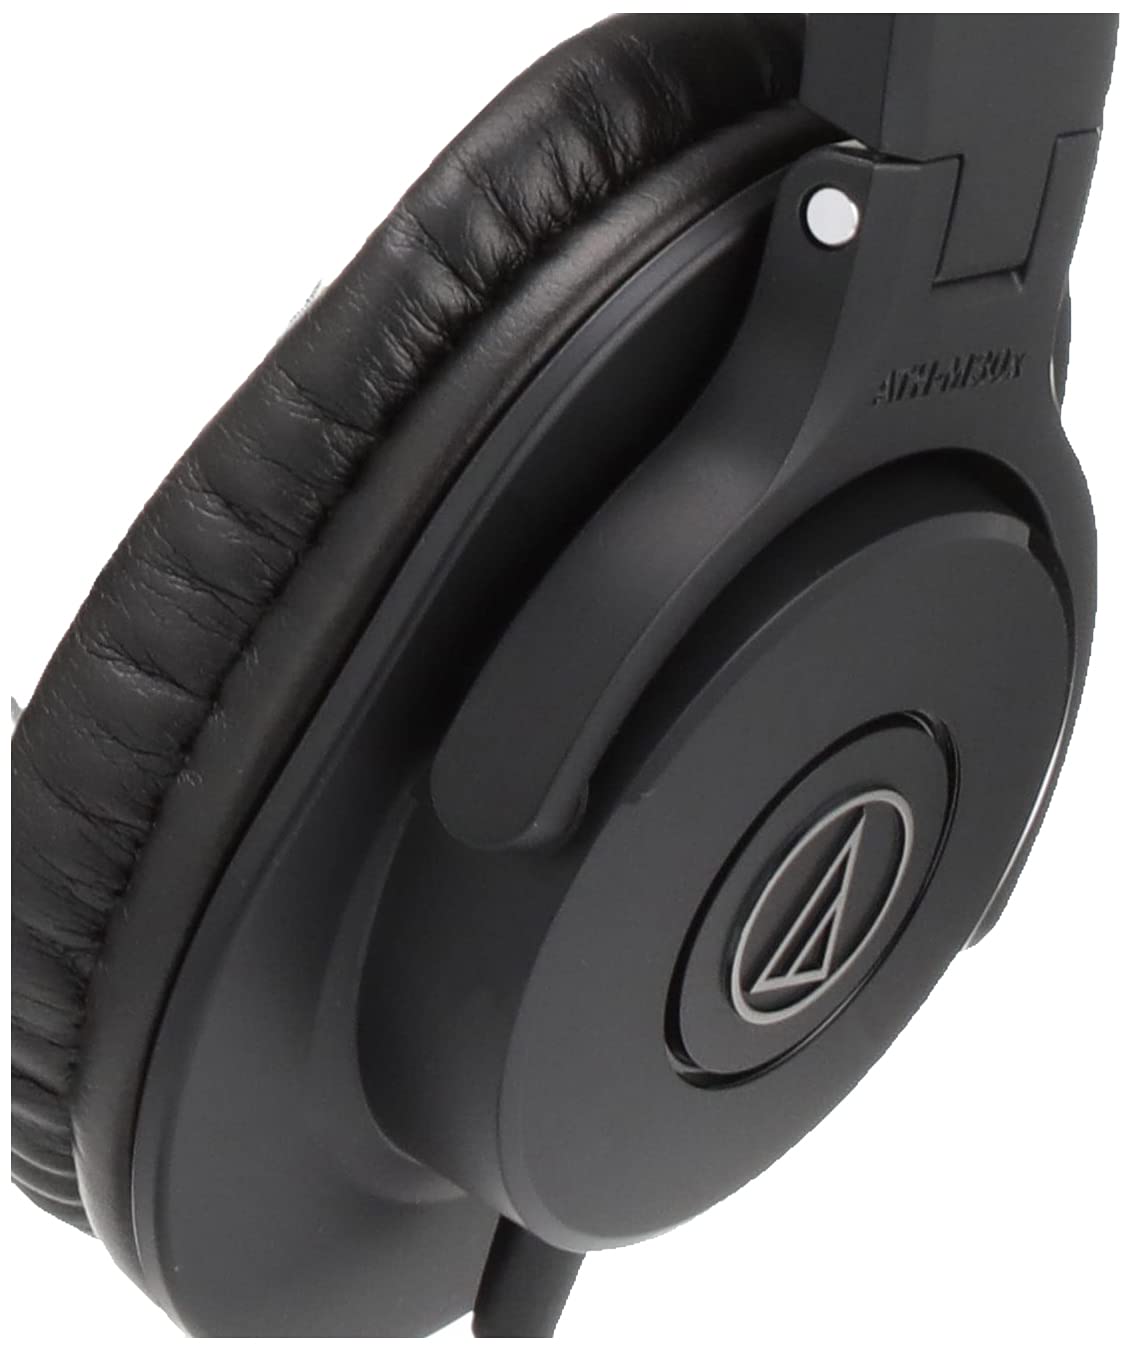 Mua Audio-Technica ATH-M30x Professional Studio Monitor Headphones, Black  trên Amazon Mỹ chính hãng 2023 | Giaonhan247